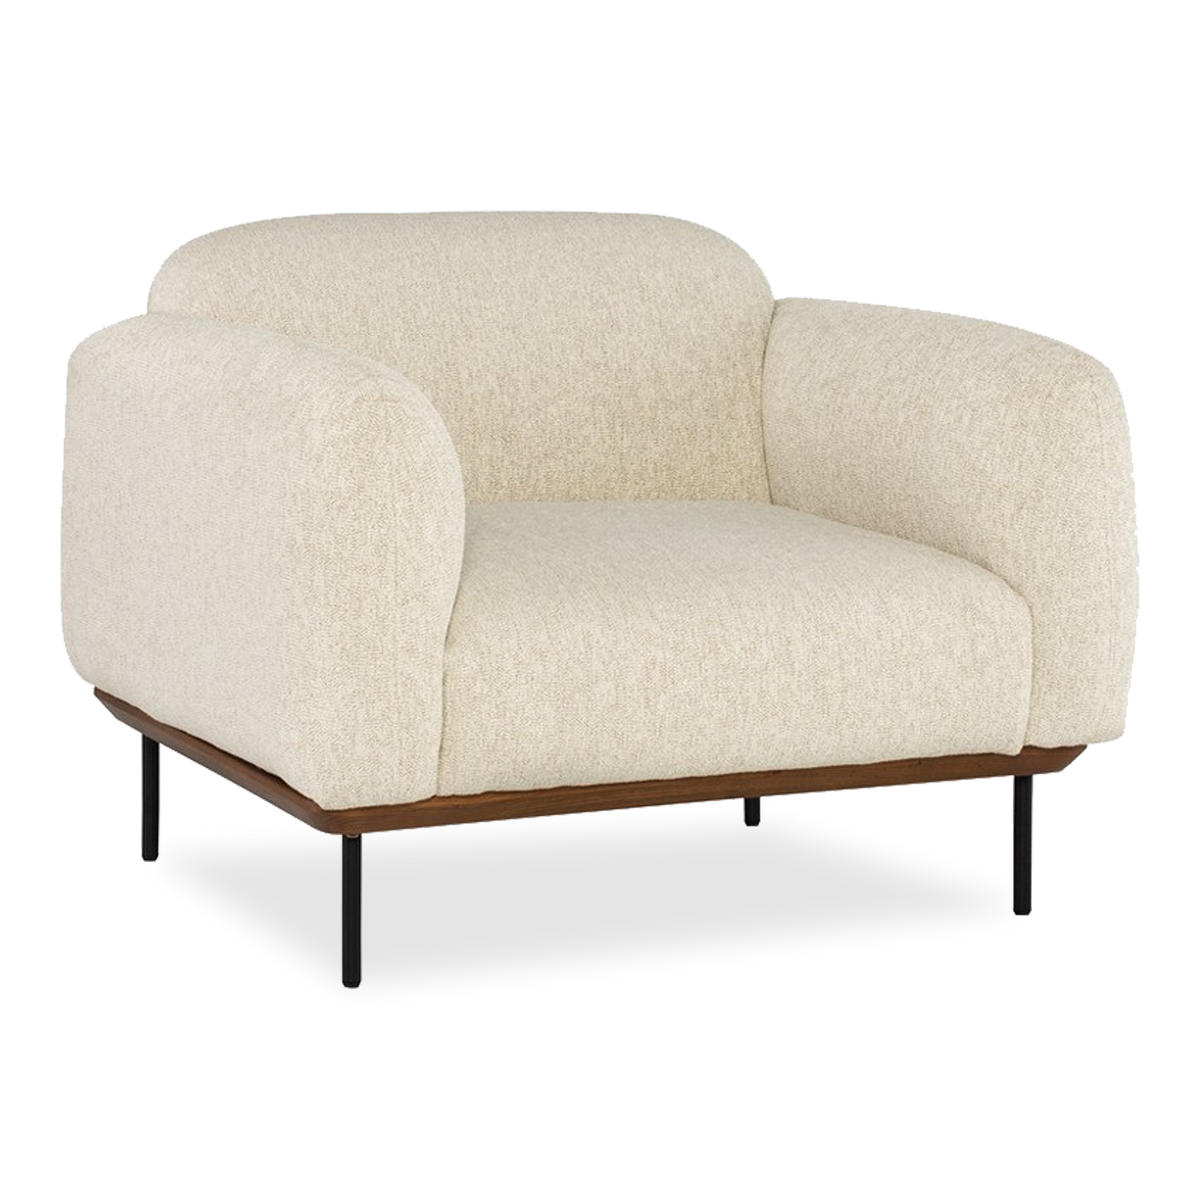 Rubio Lounge Chair